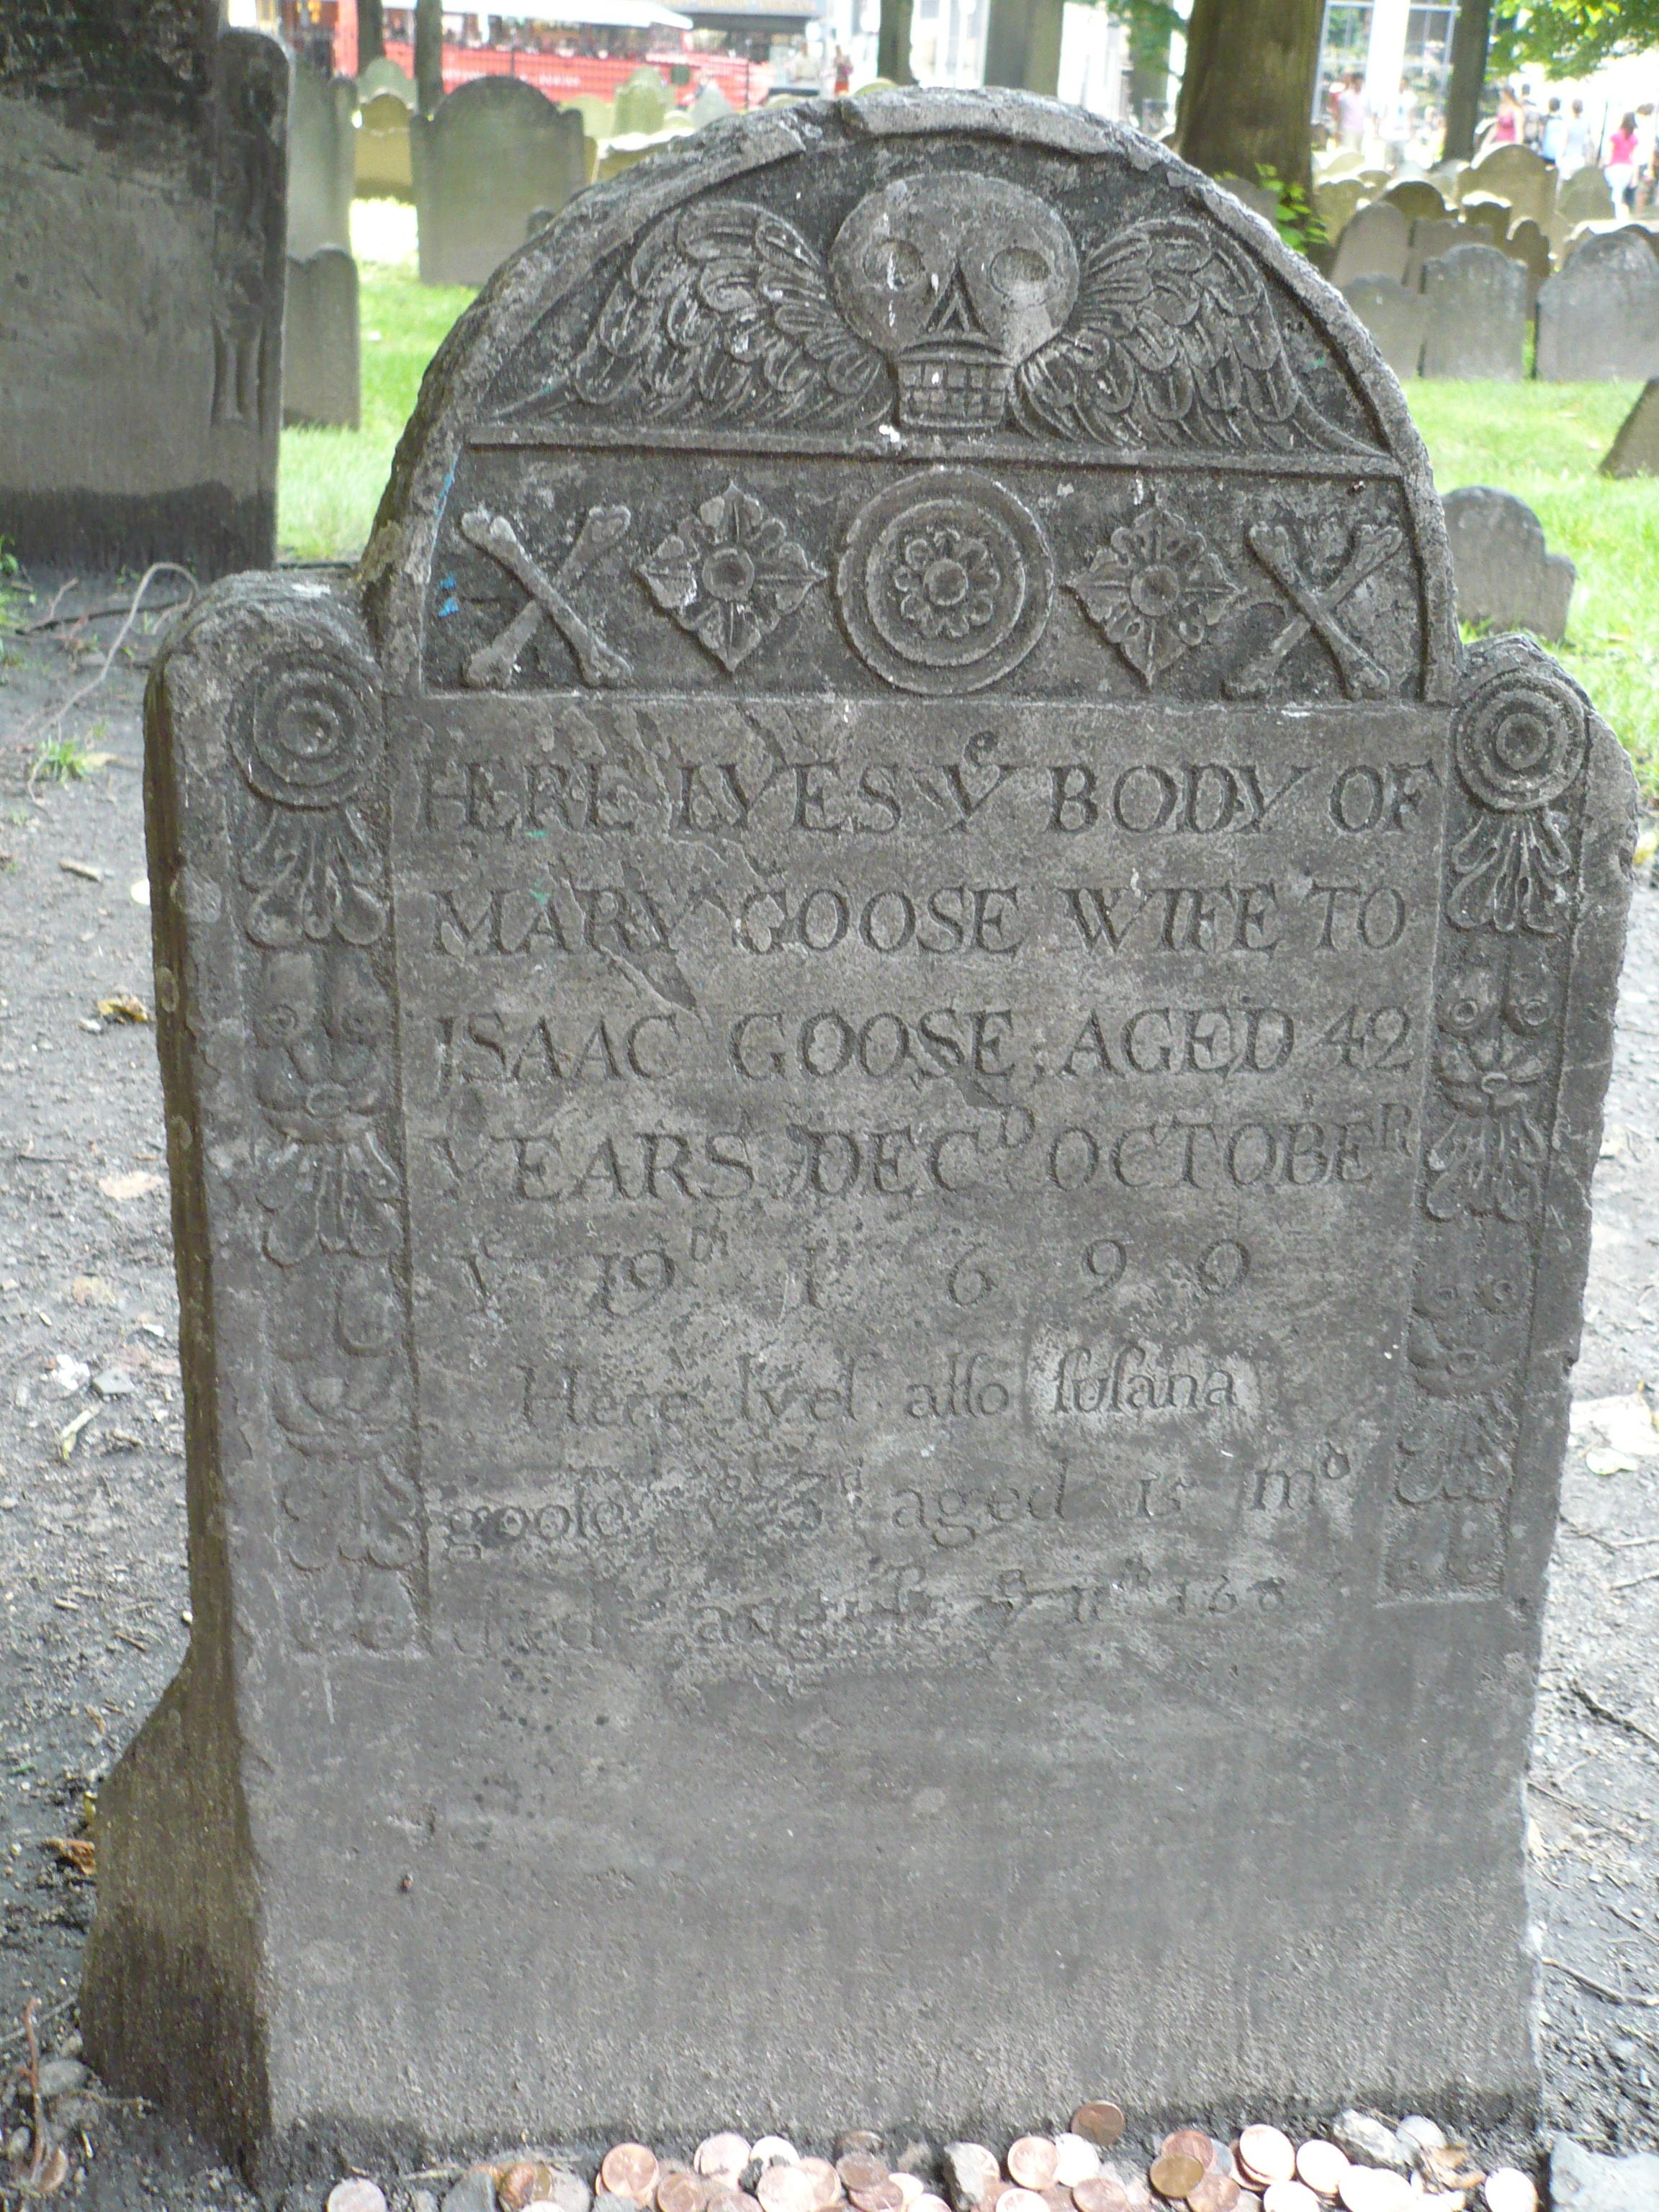 Headstone, Skull, Warhammer in 1690